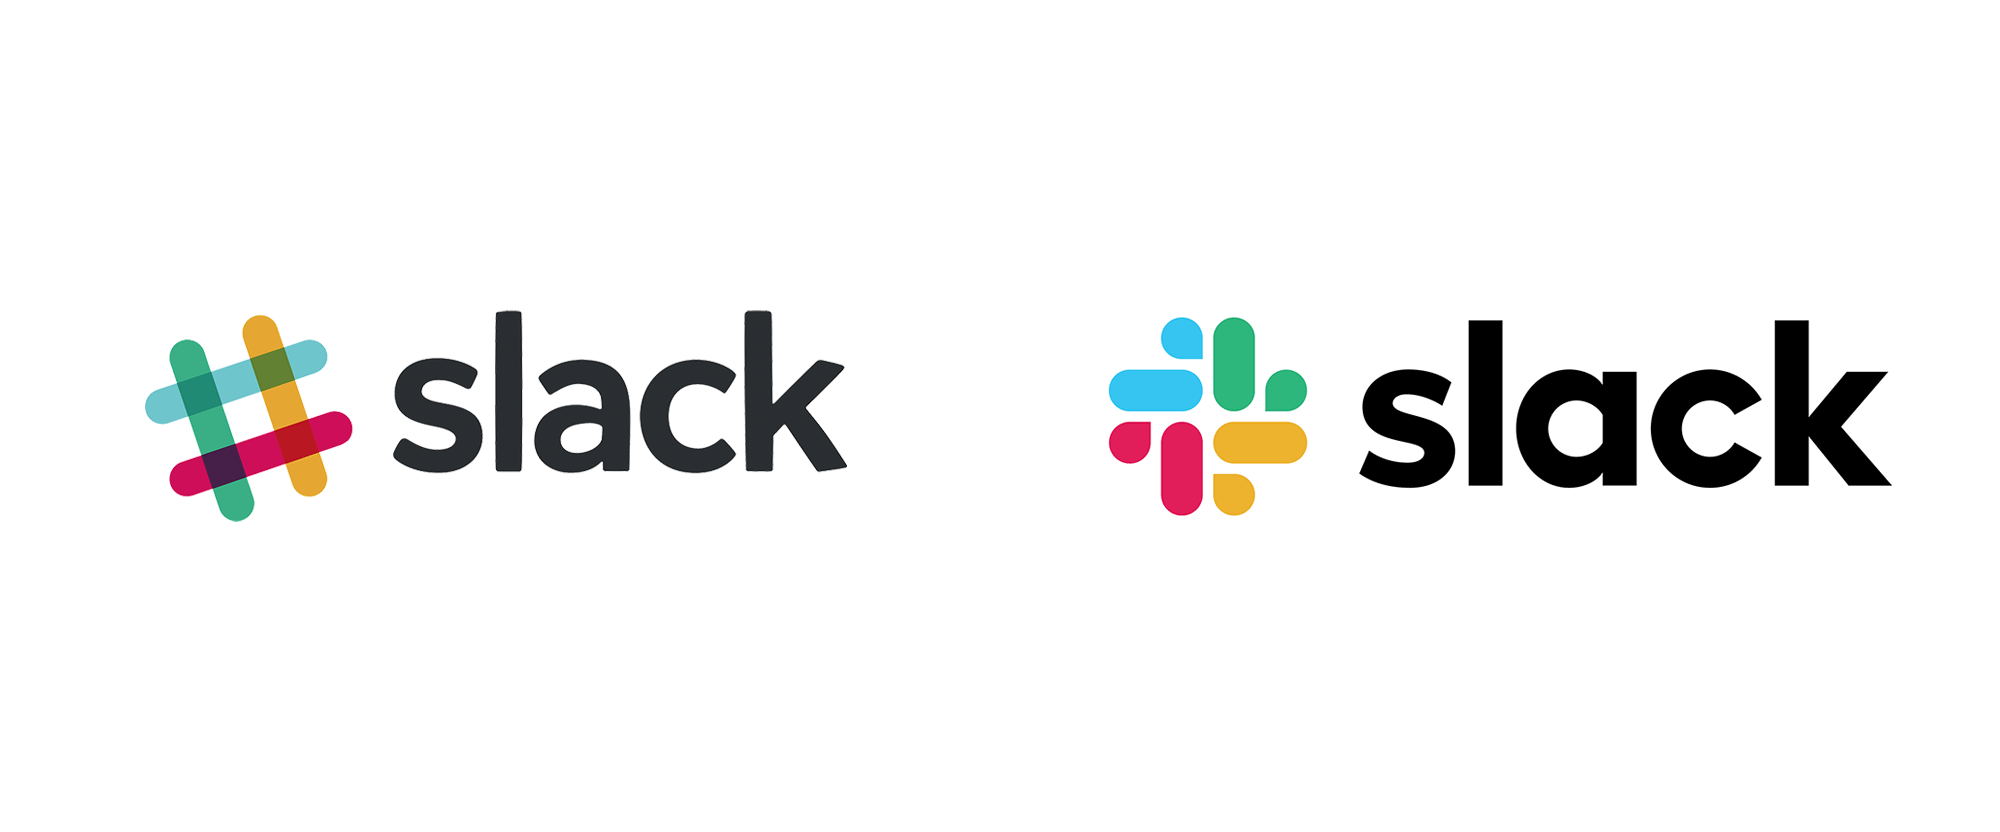 Slack Logo - Brand New: New Logo and Identity for Slack by Pentagram and In-house